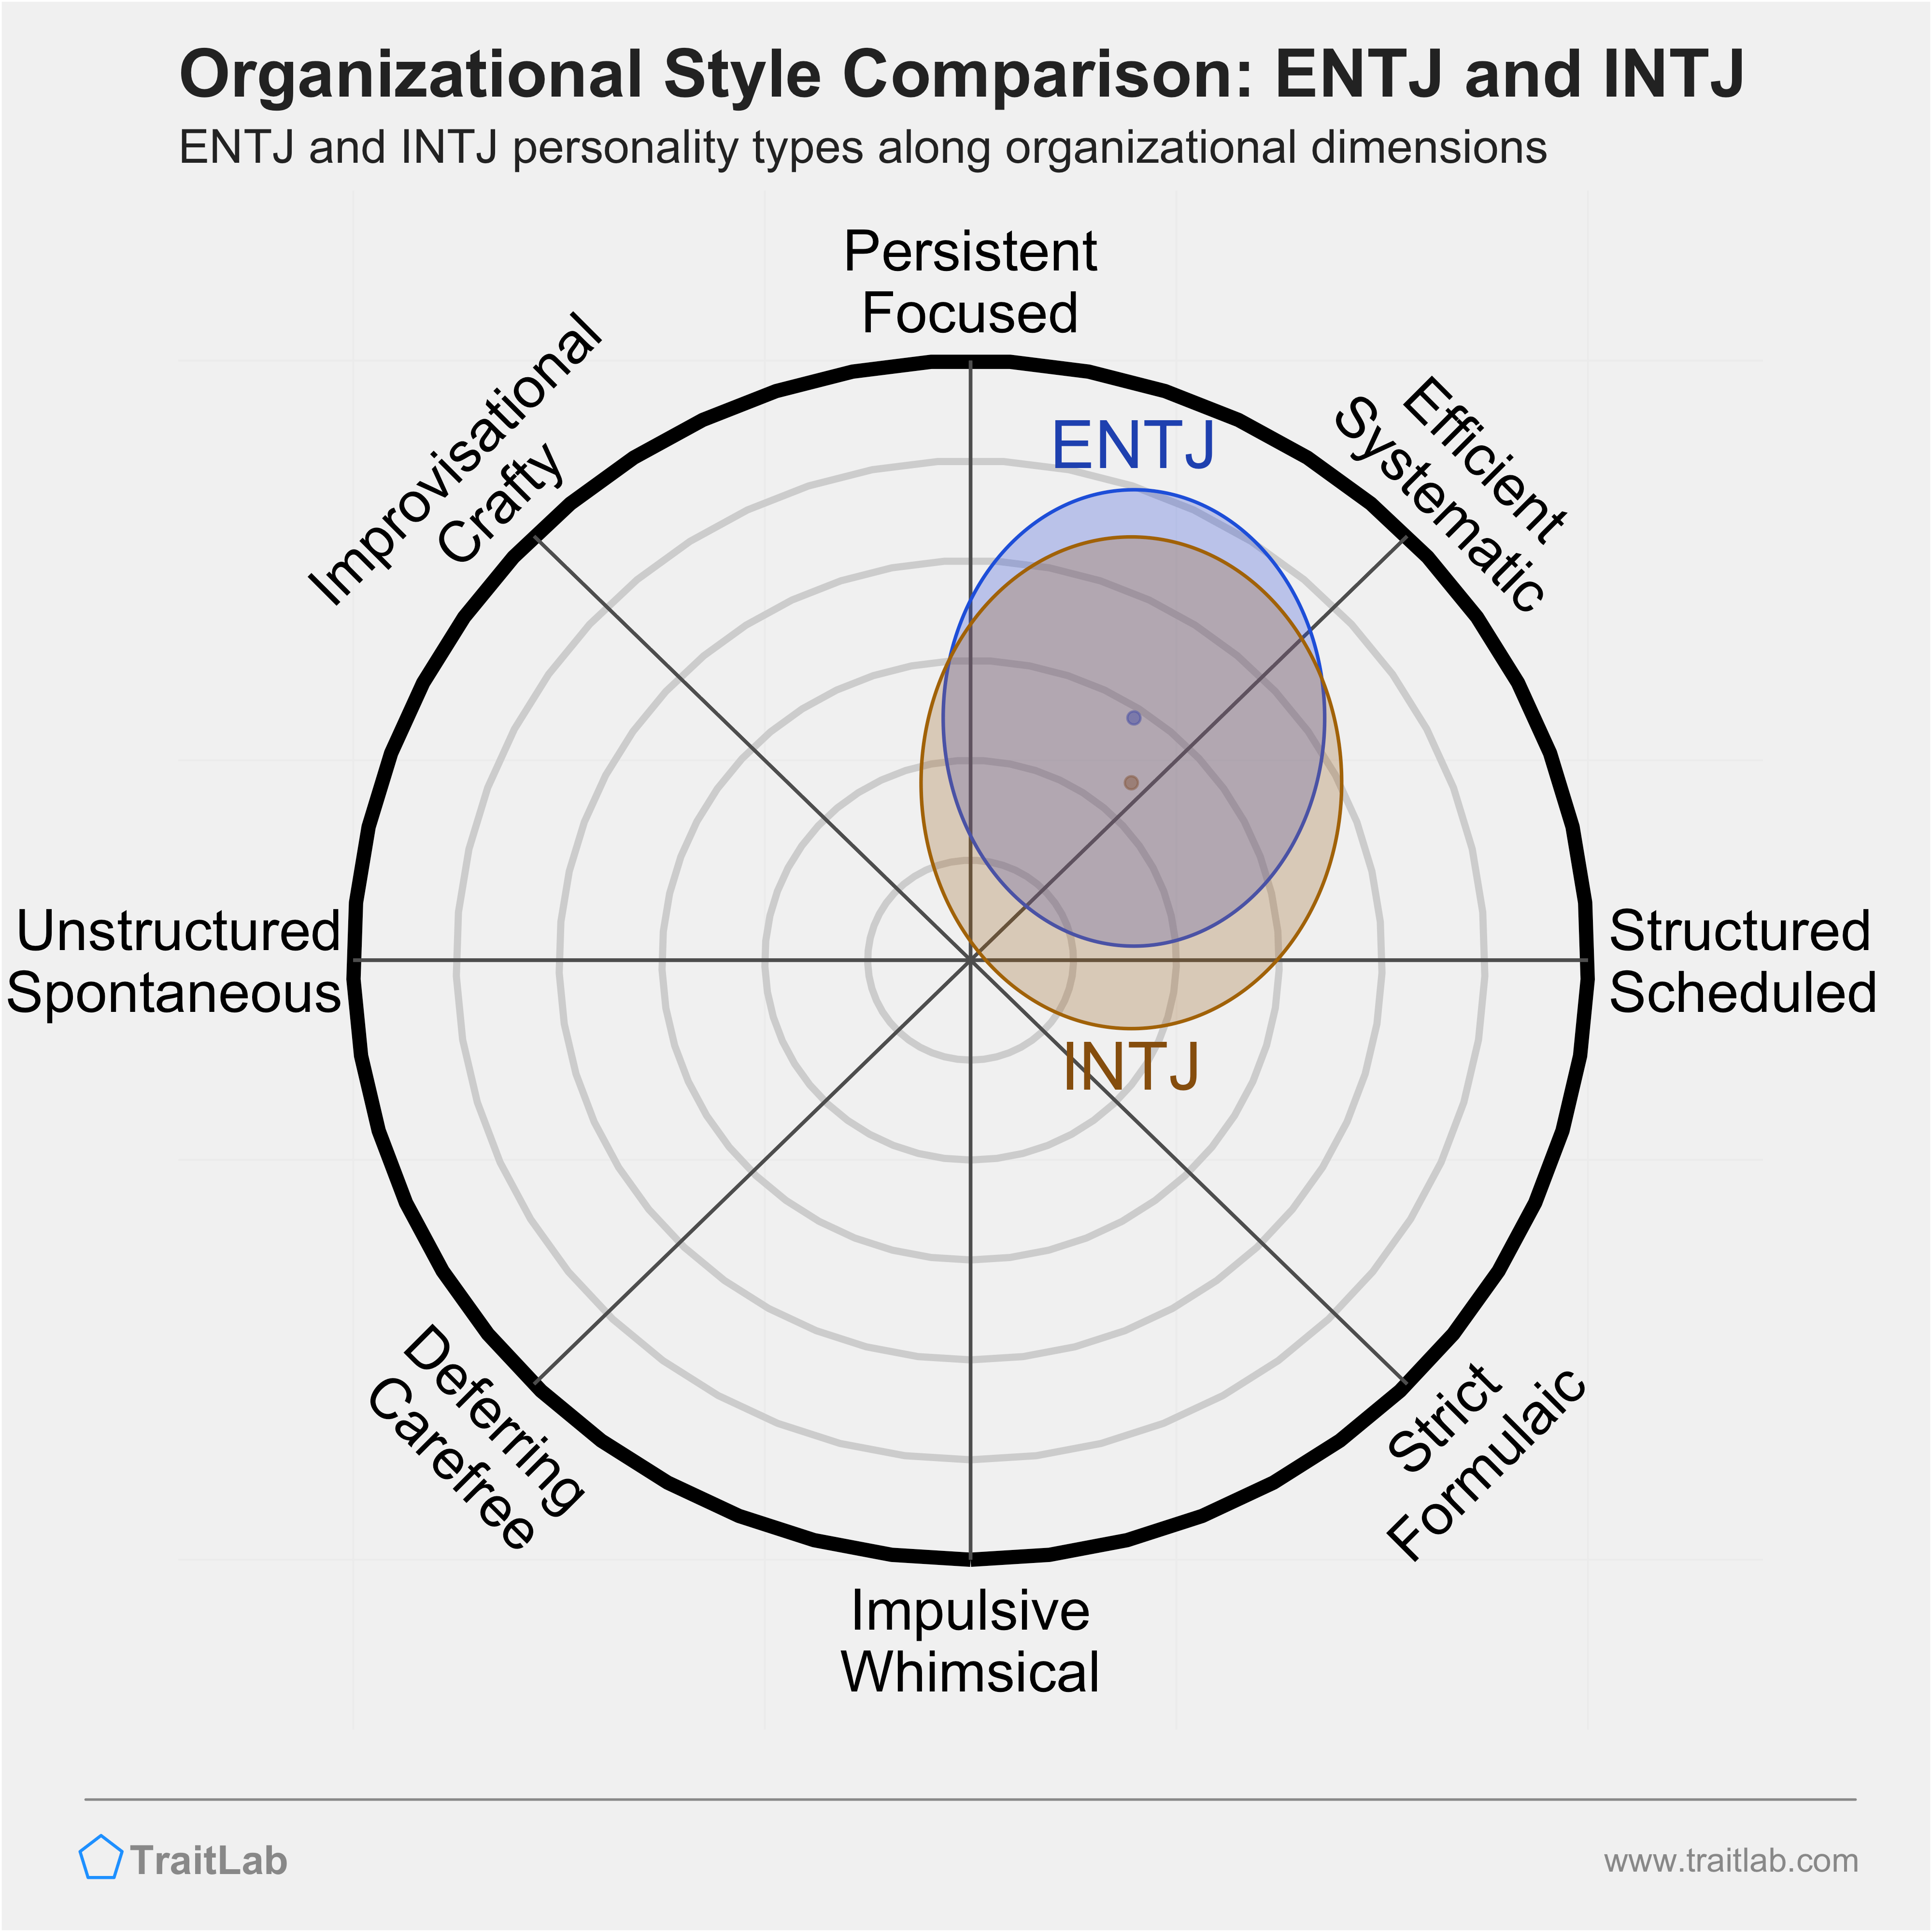 ENTJ and INTJ comparison across organizational dimensions